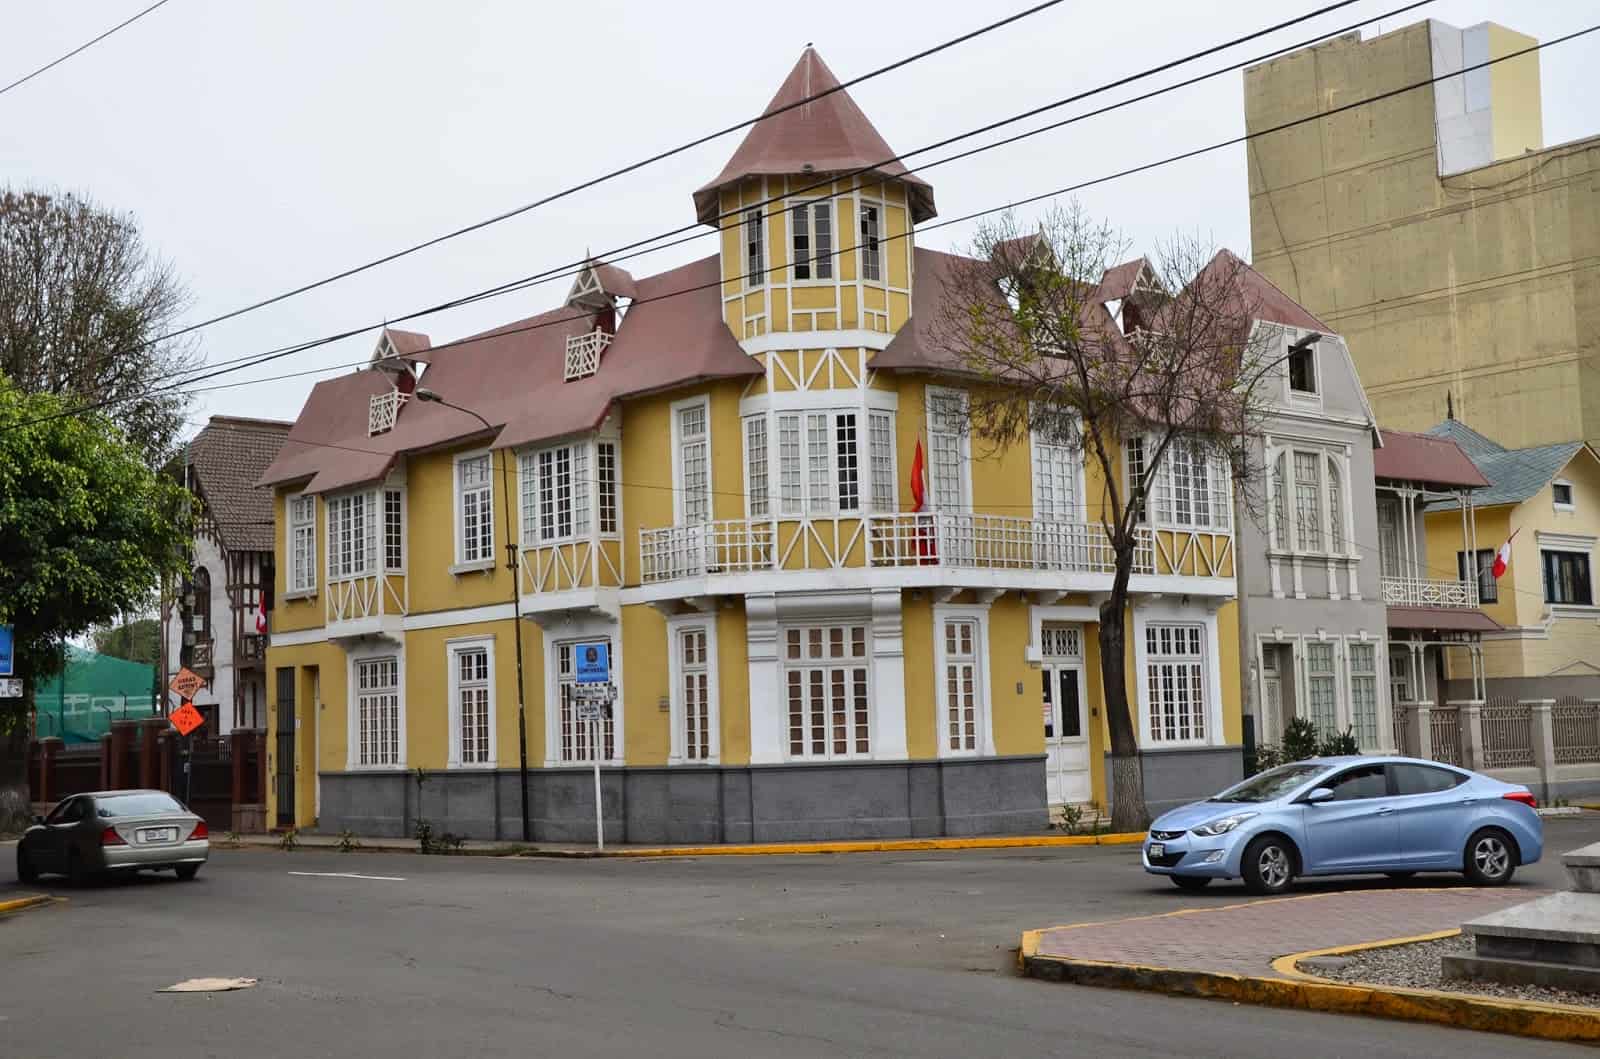 A mansion on Avenida Sáenz Peña in Barranco, Lima, Peru